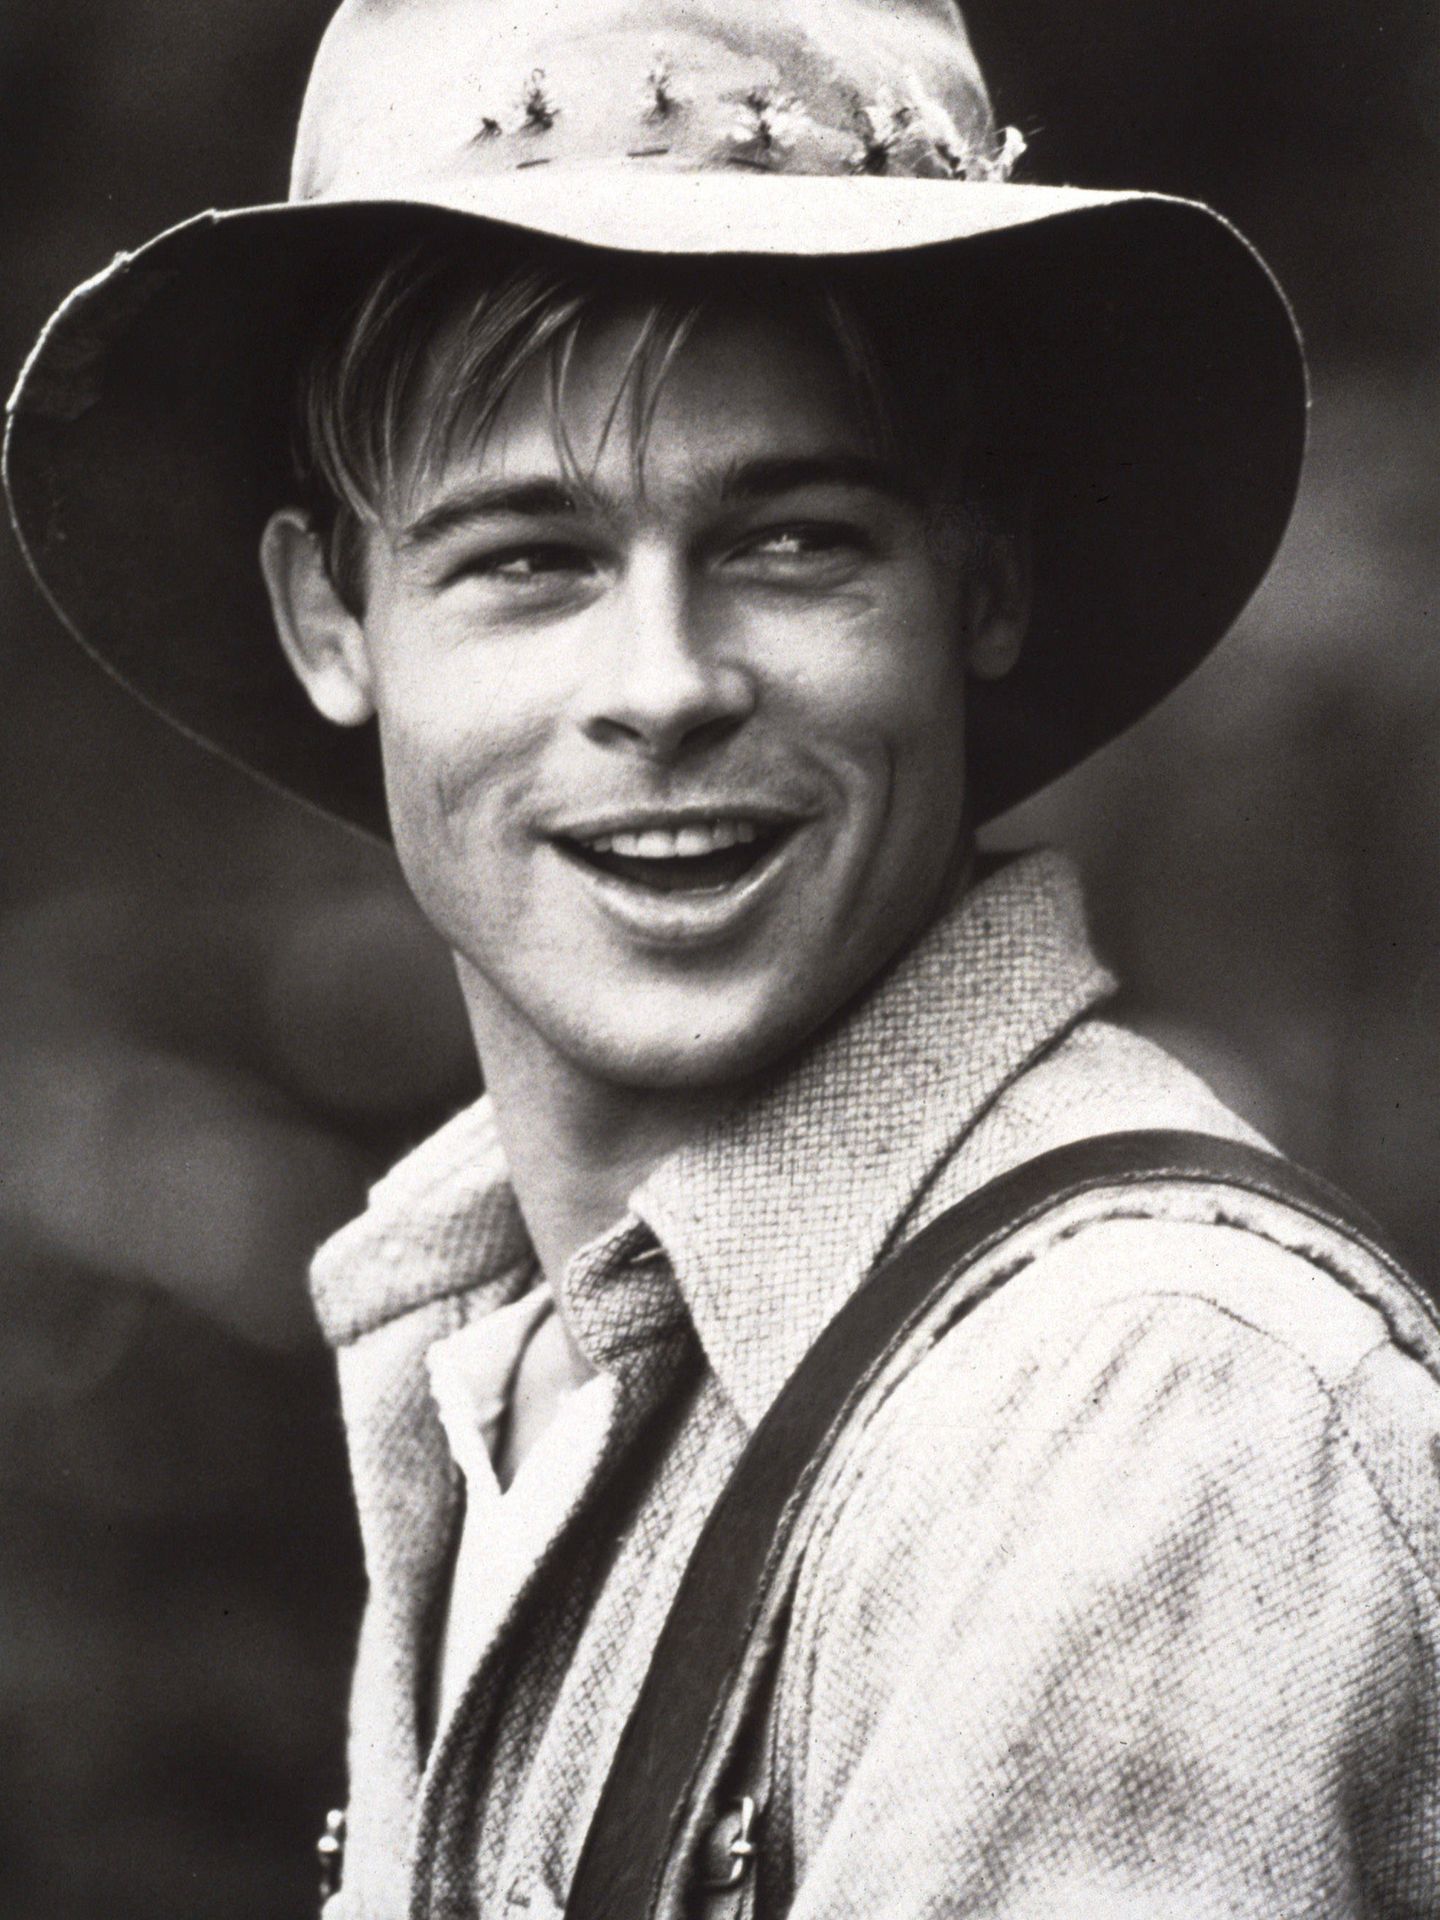  Un joven Brad Pitt, en una imagen de 1991. (Getty)